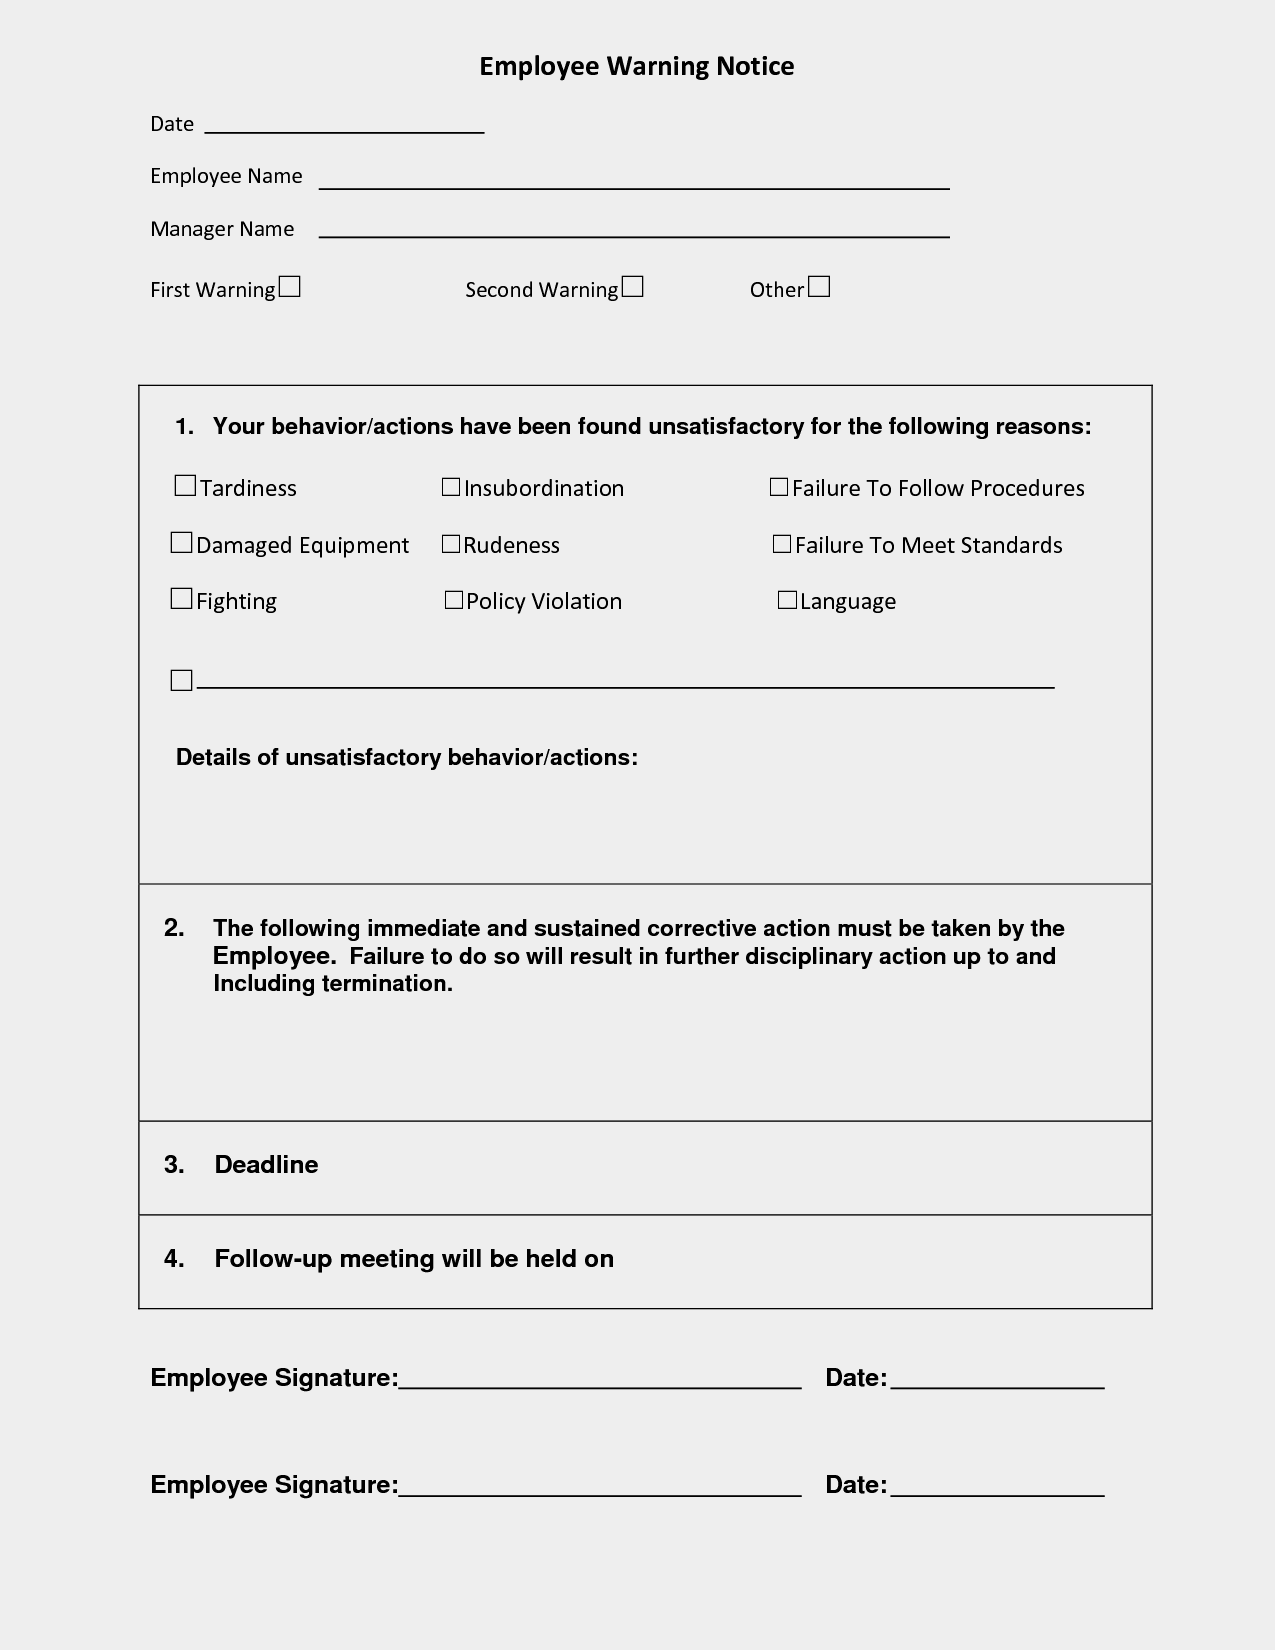 Sample of Employee Warning Form